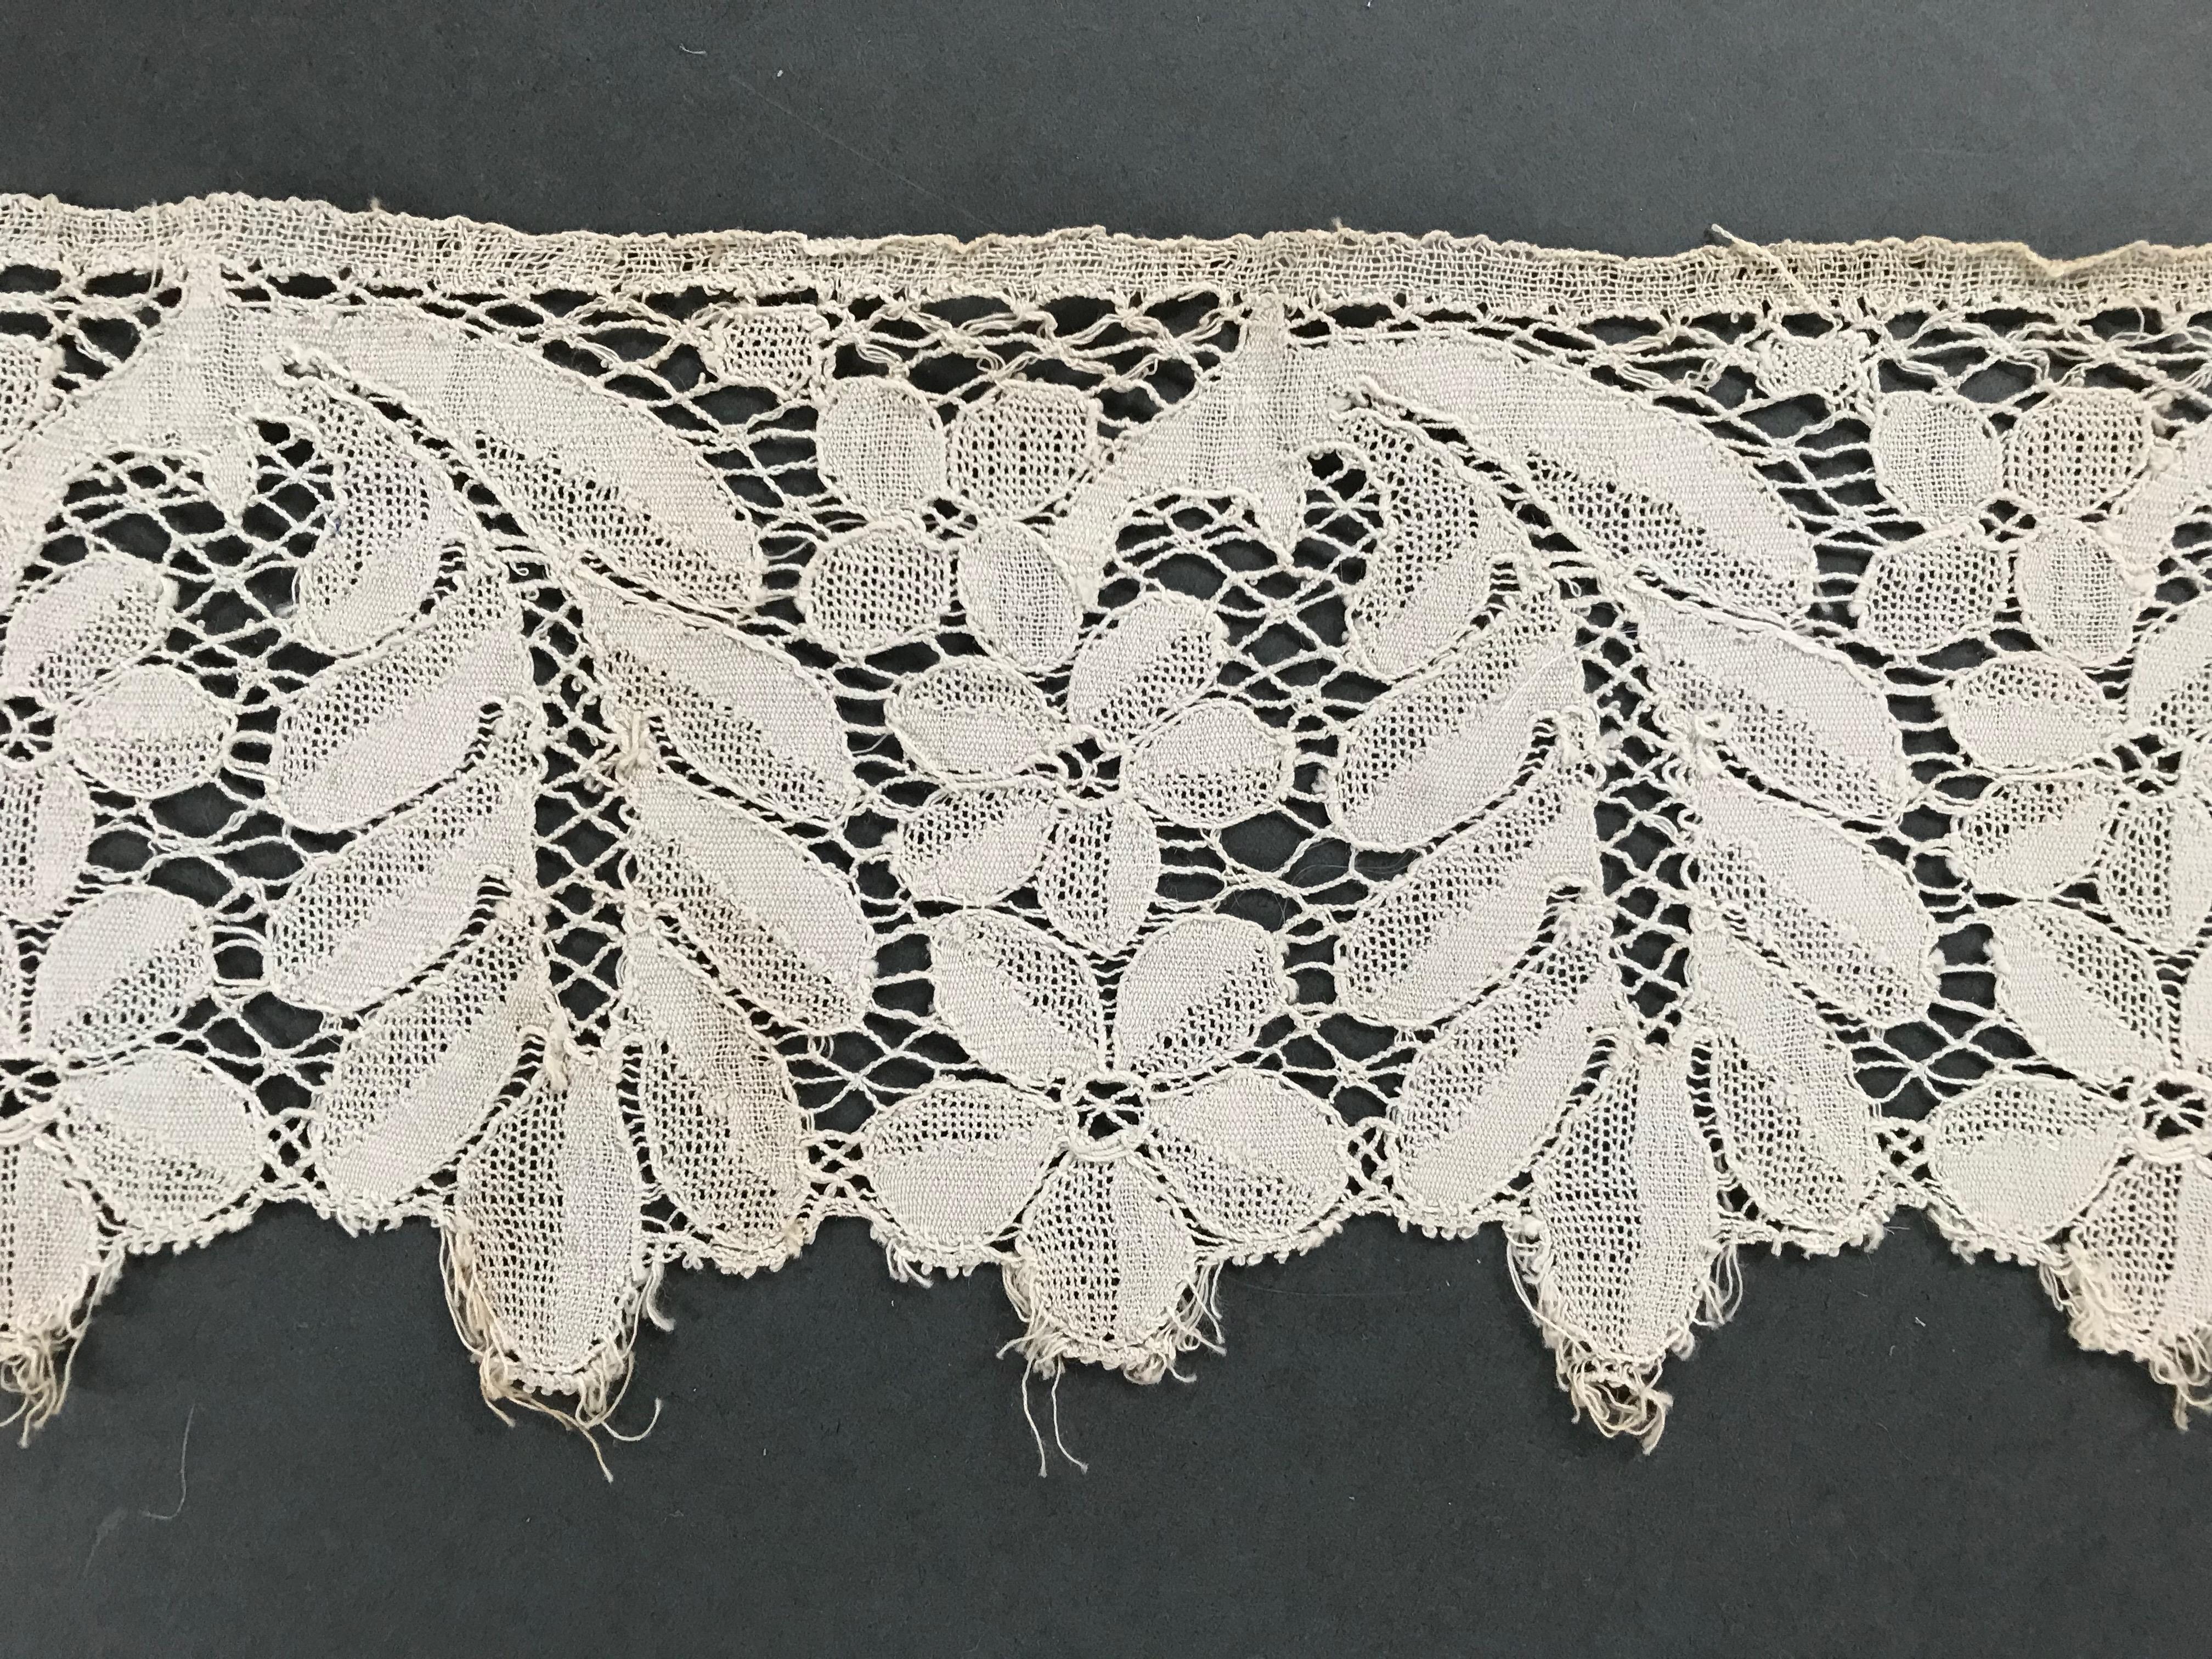 Two lengths of lace, 1x cotton filet crochet border,7x 220cm and 1xcotton bobbin lace, 10x 280 cm - Image 5 of 5